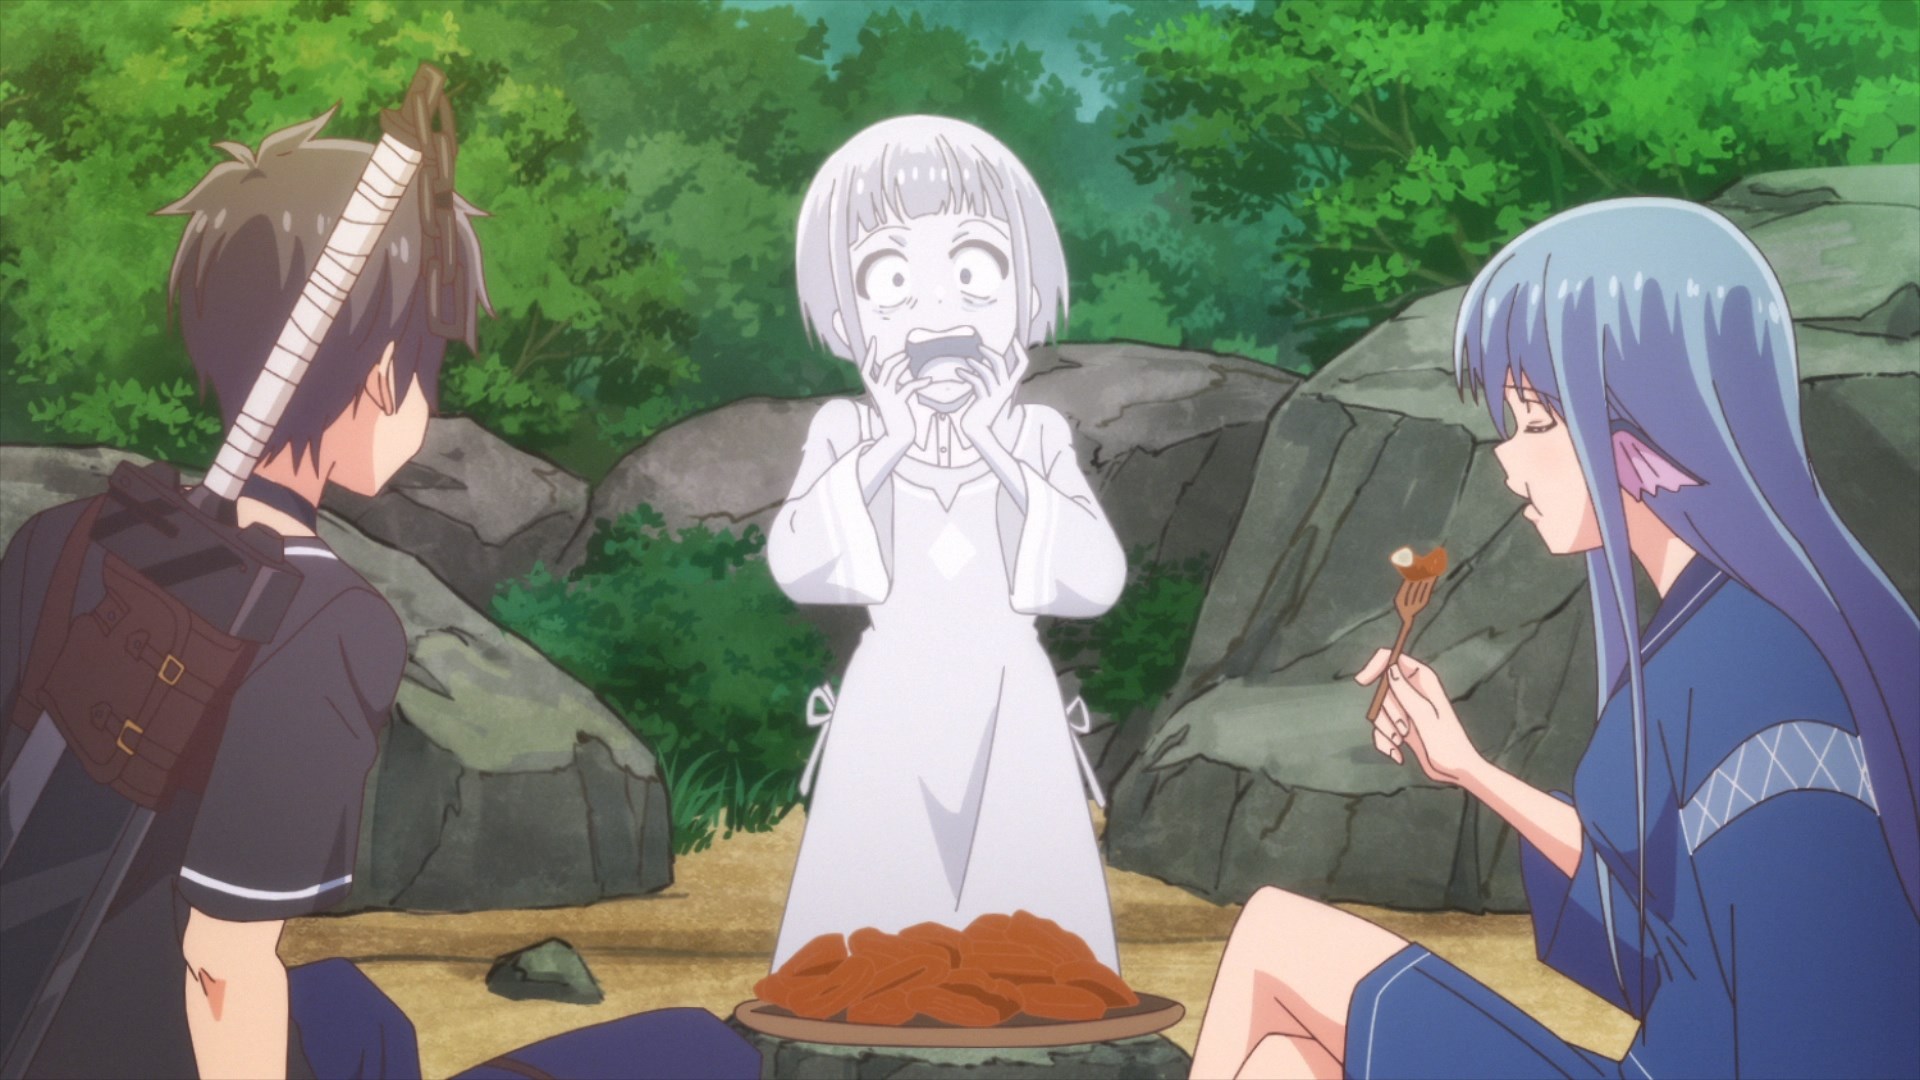 BanG Dream MyGo Gets Sequel Centered Around Ave Mujica - Anime Corner